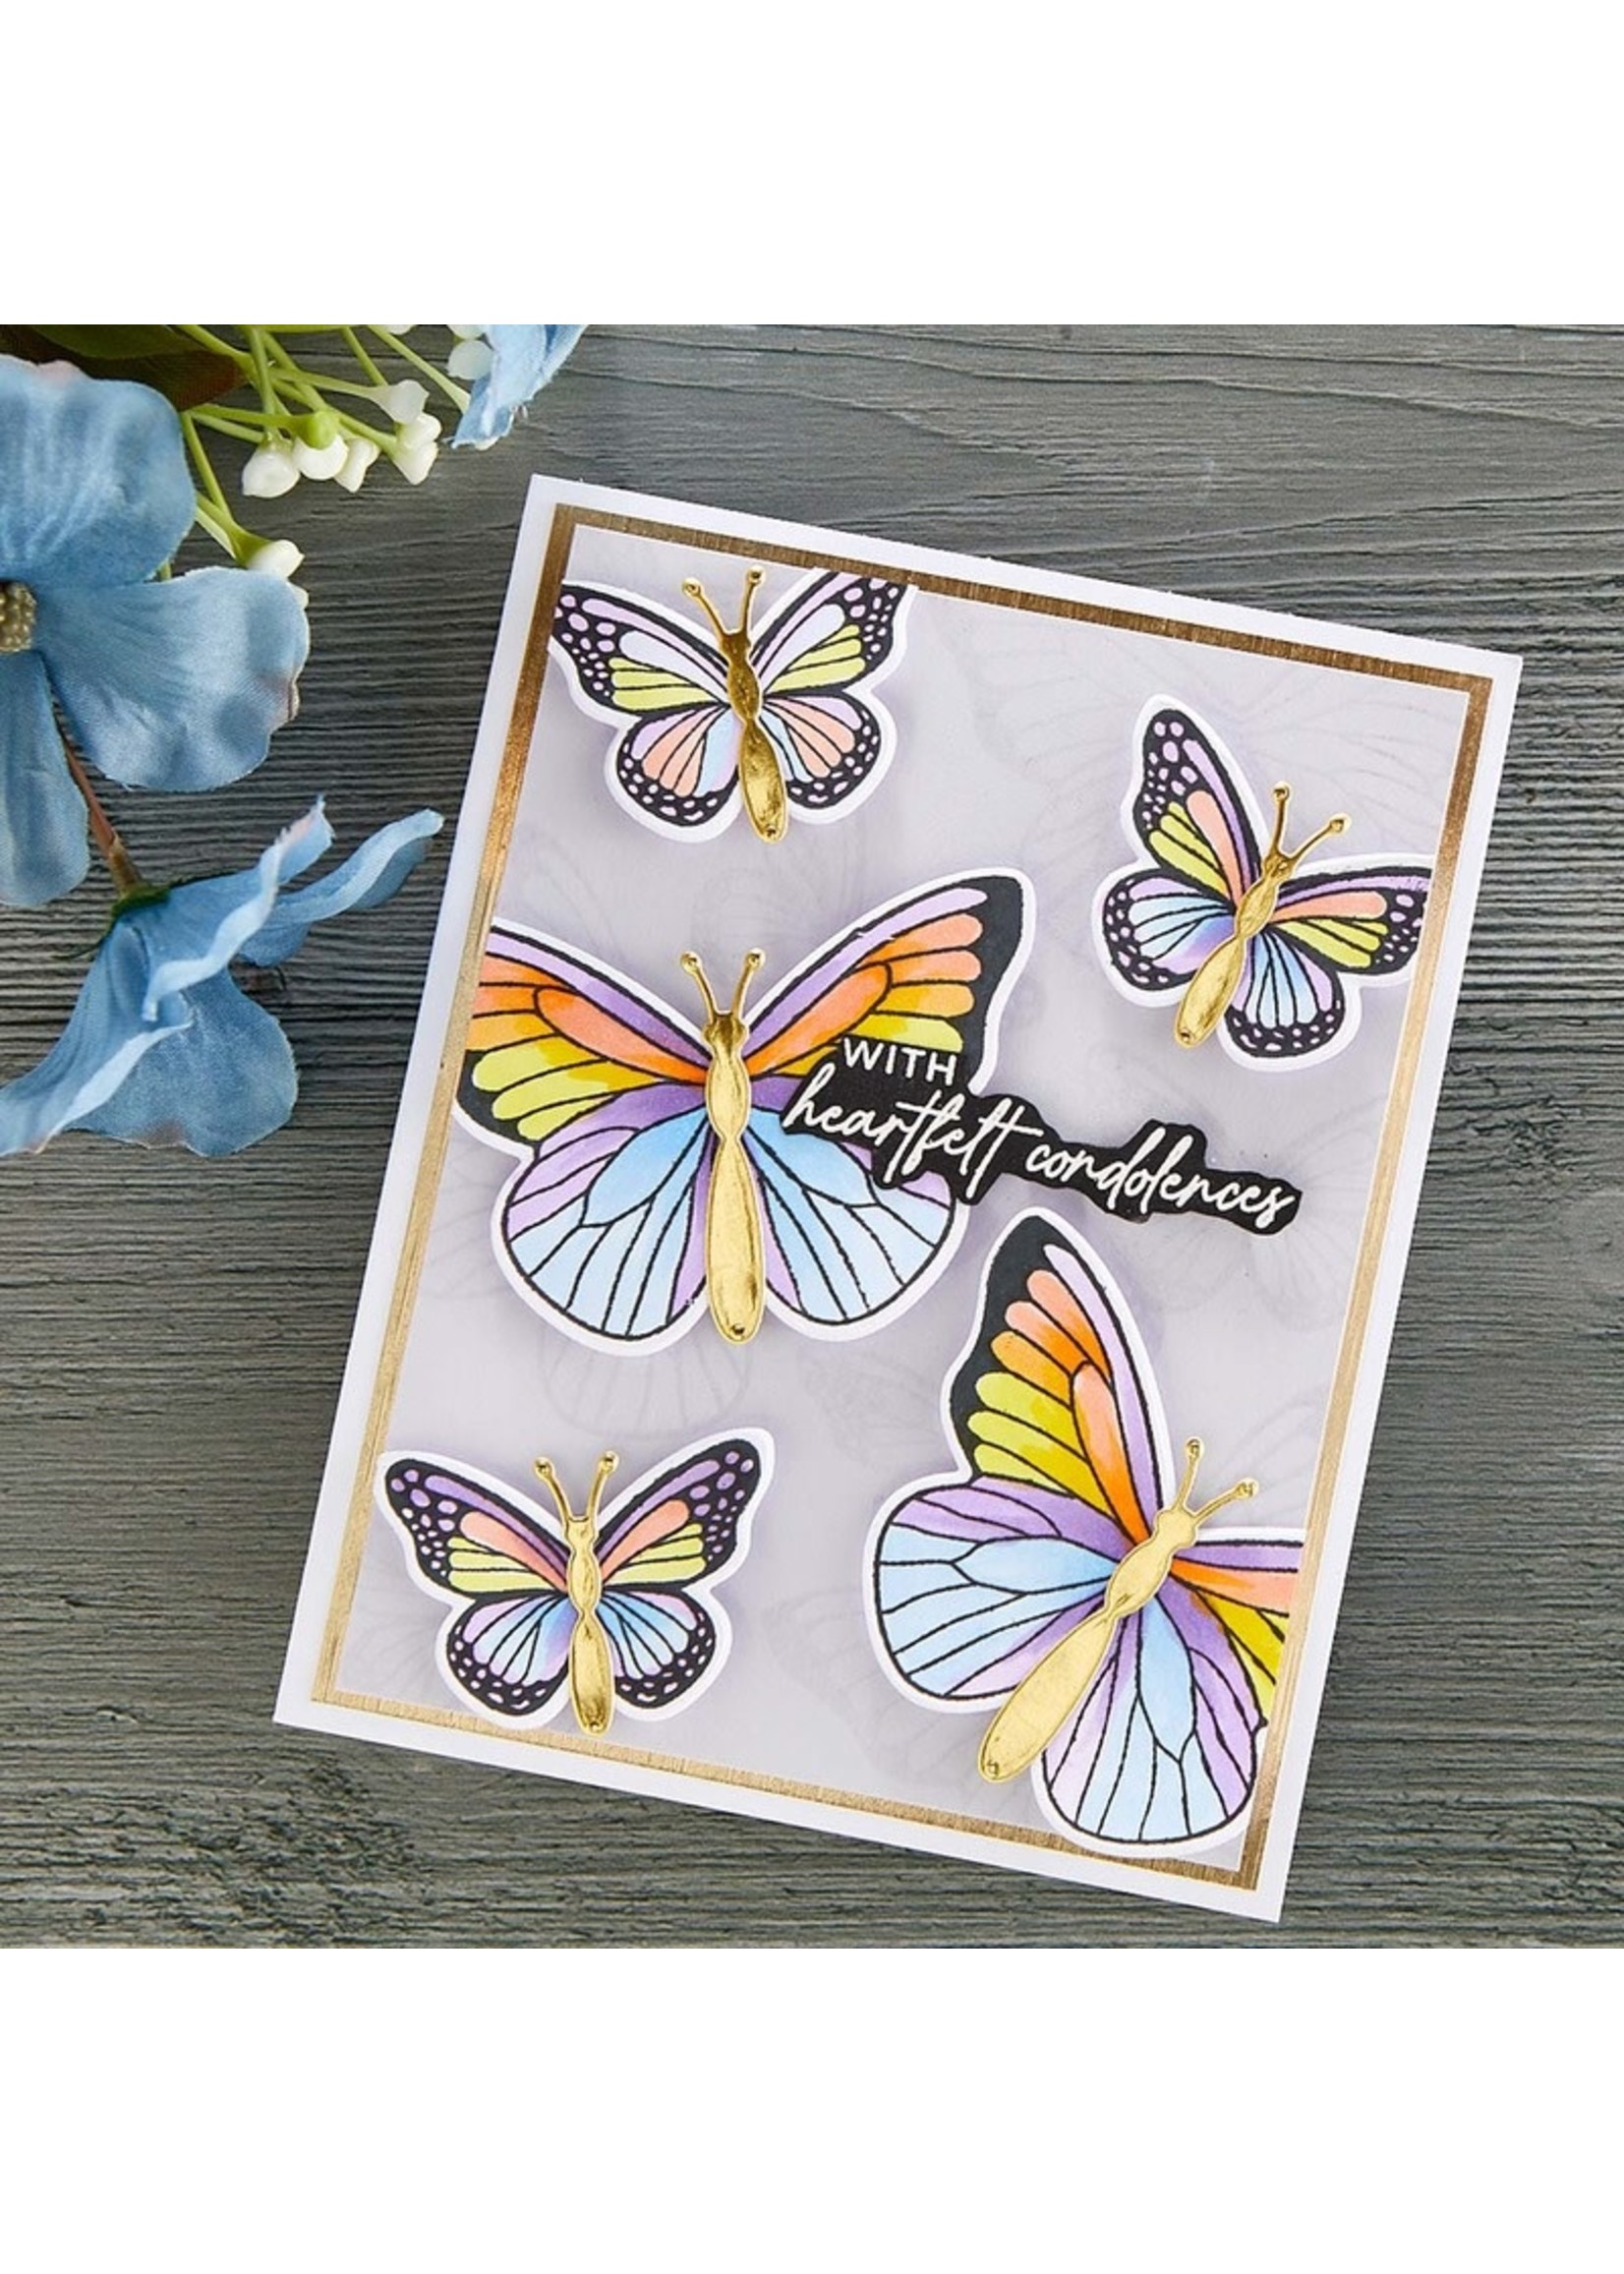 SPELLBINDERS PAPERCRAFTS, INC Bibi's Butterflies - So Many Butterflies Dies